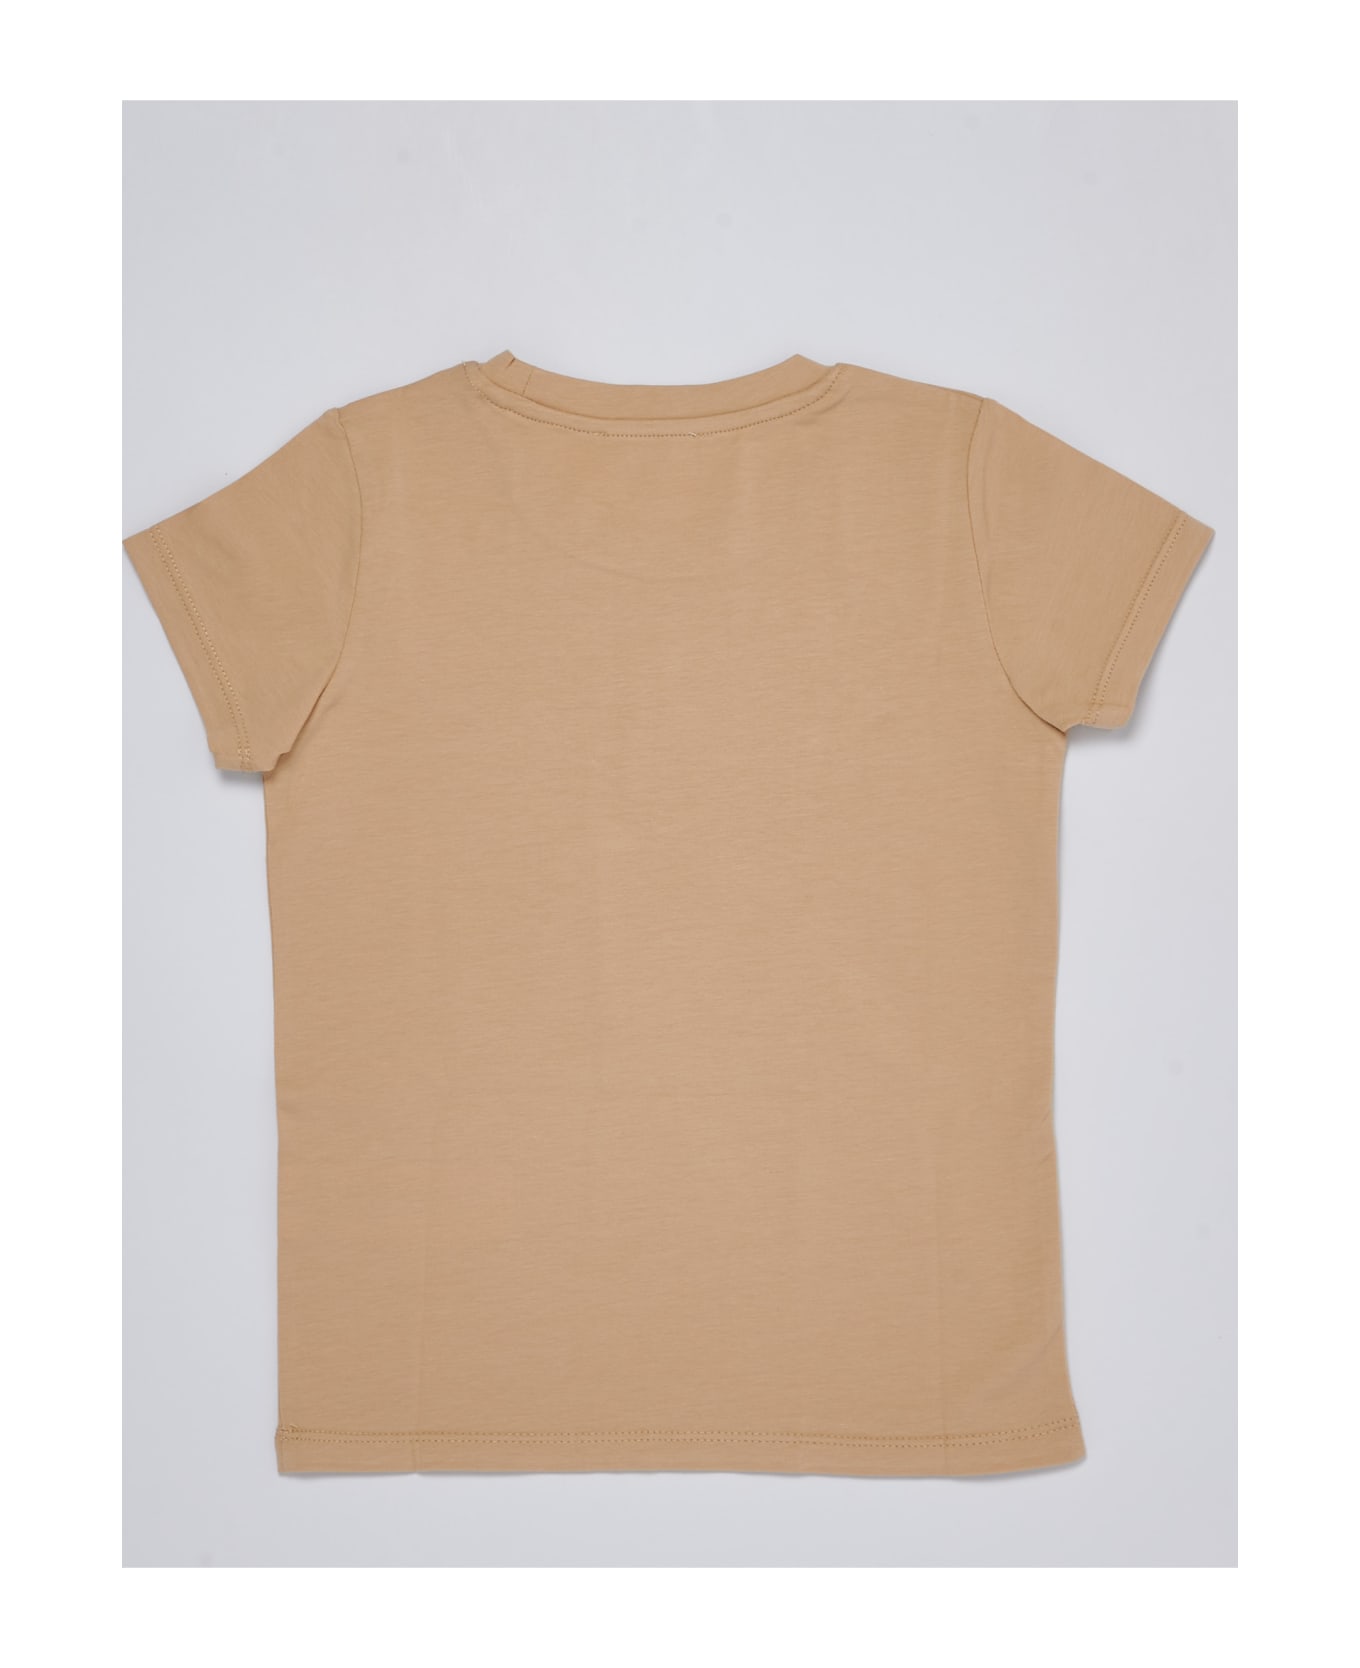 Michael Kors T-shirt T-shirt - CORDA Tシャツ＆ポロシャツ